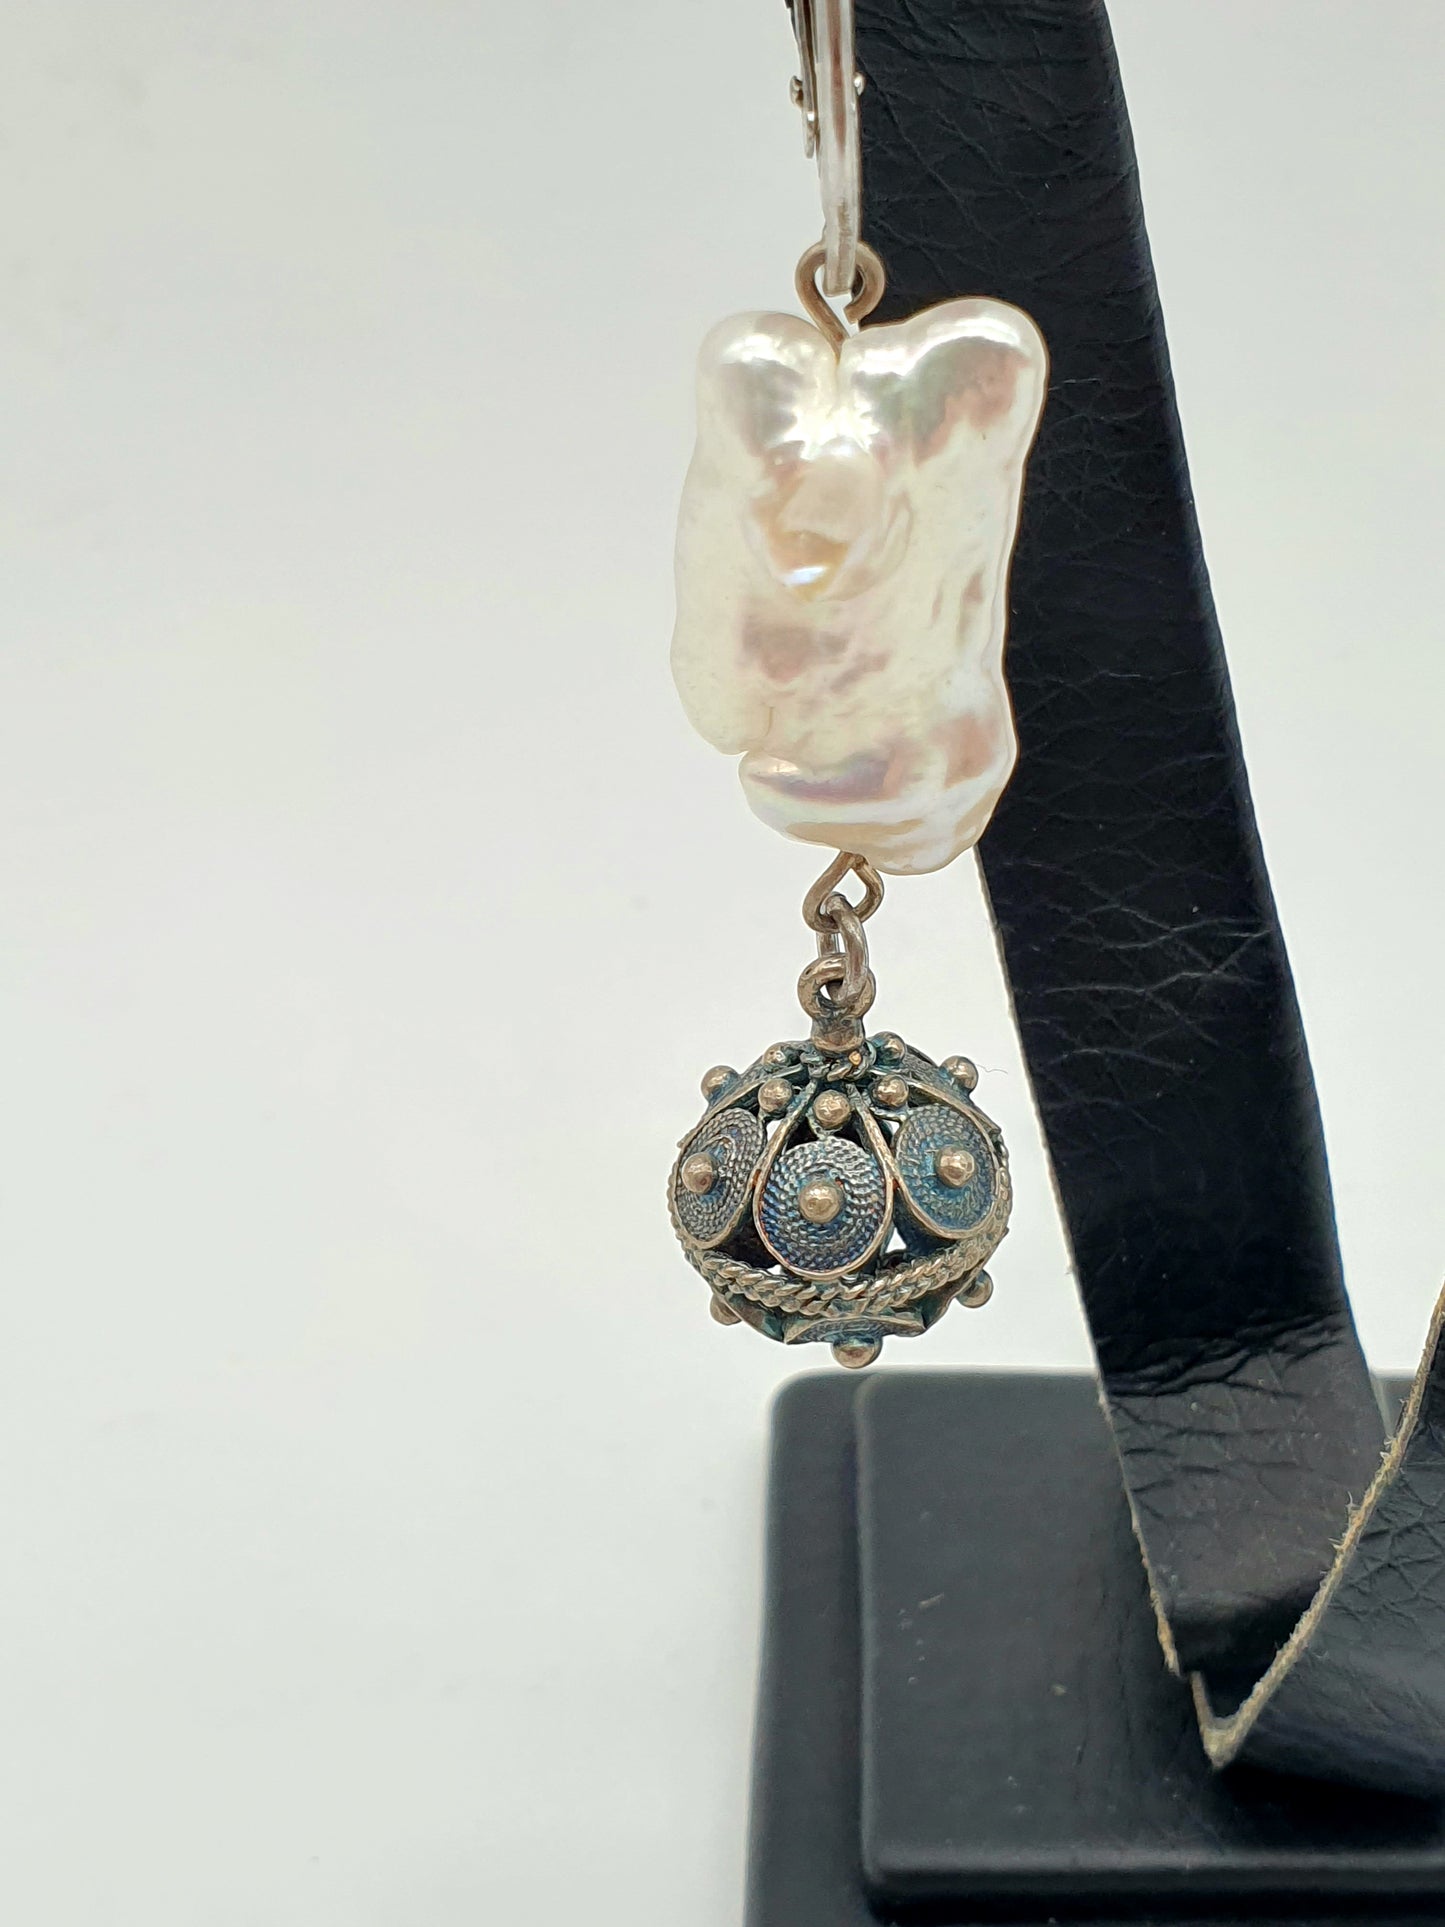 Šibenski botuni earrings 925 silver with sedef stone